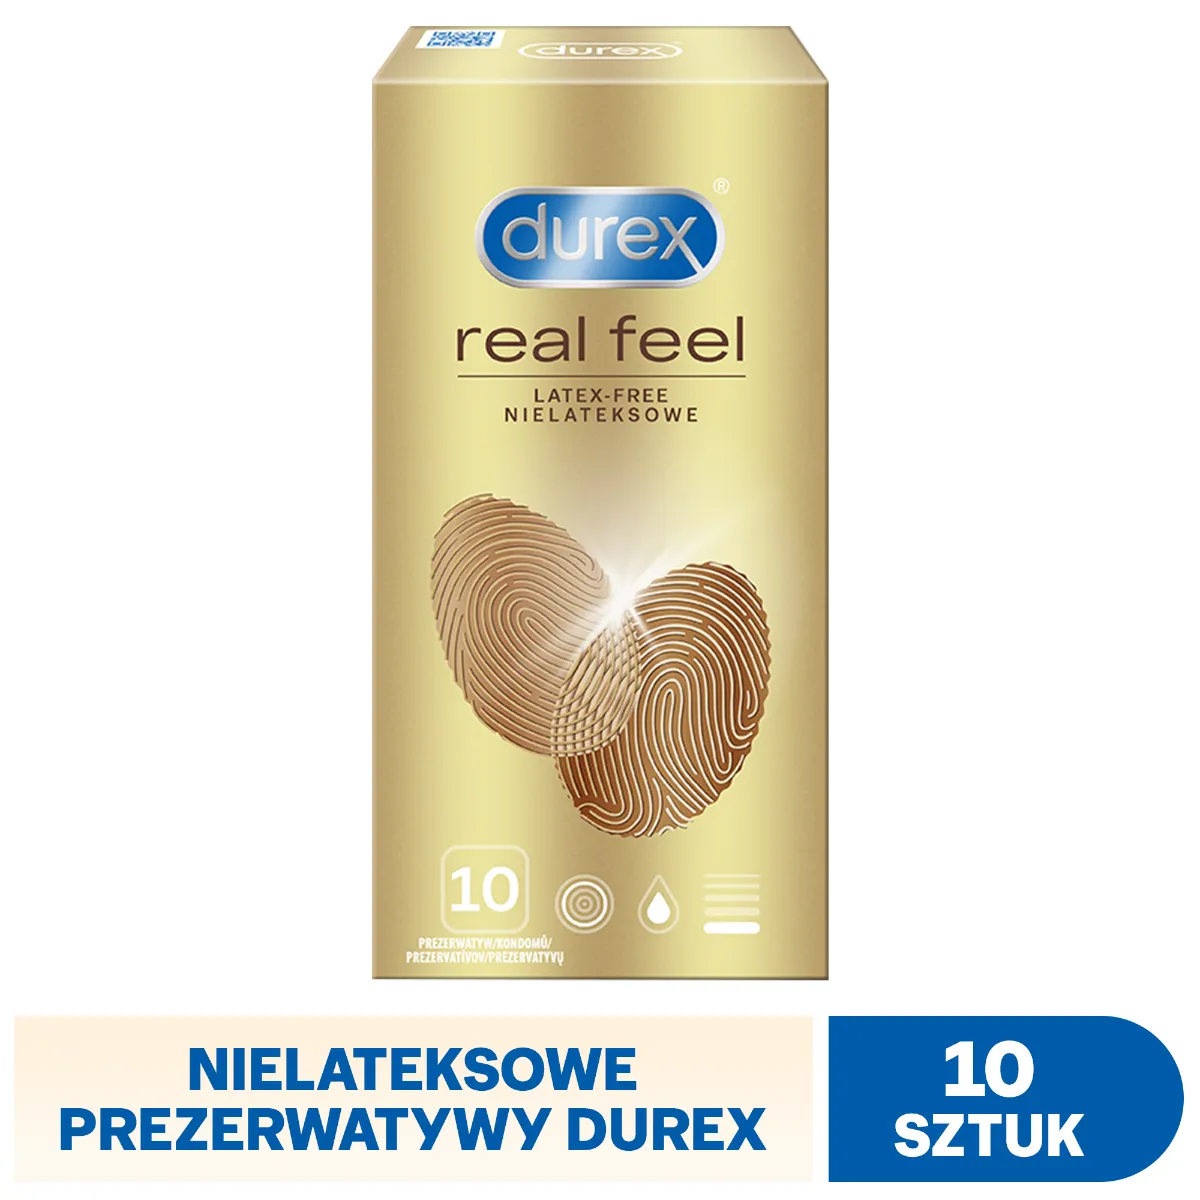 Prezerwatywy Durex real feel, 10 szt.